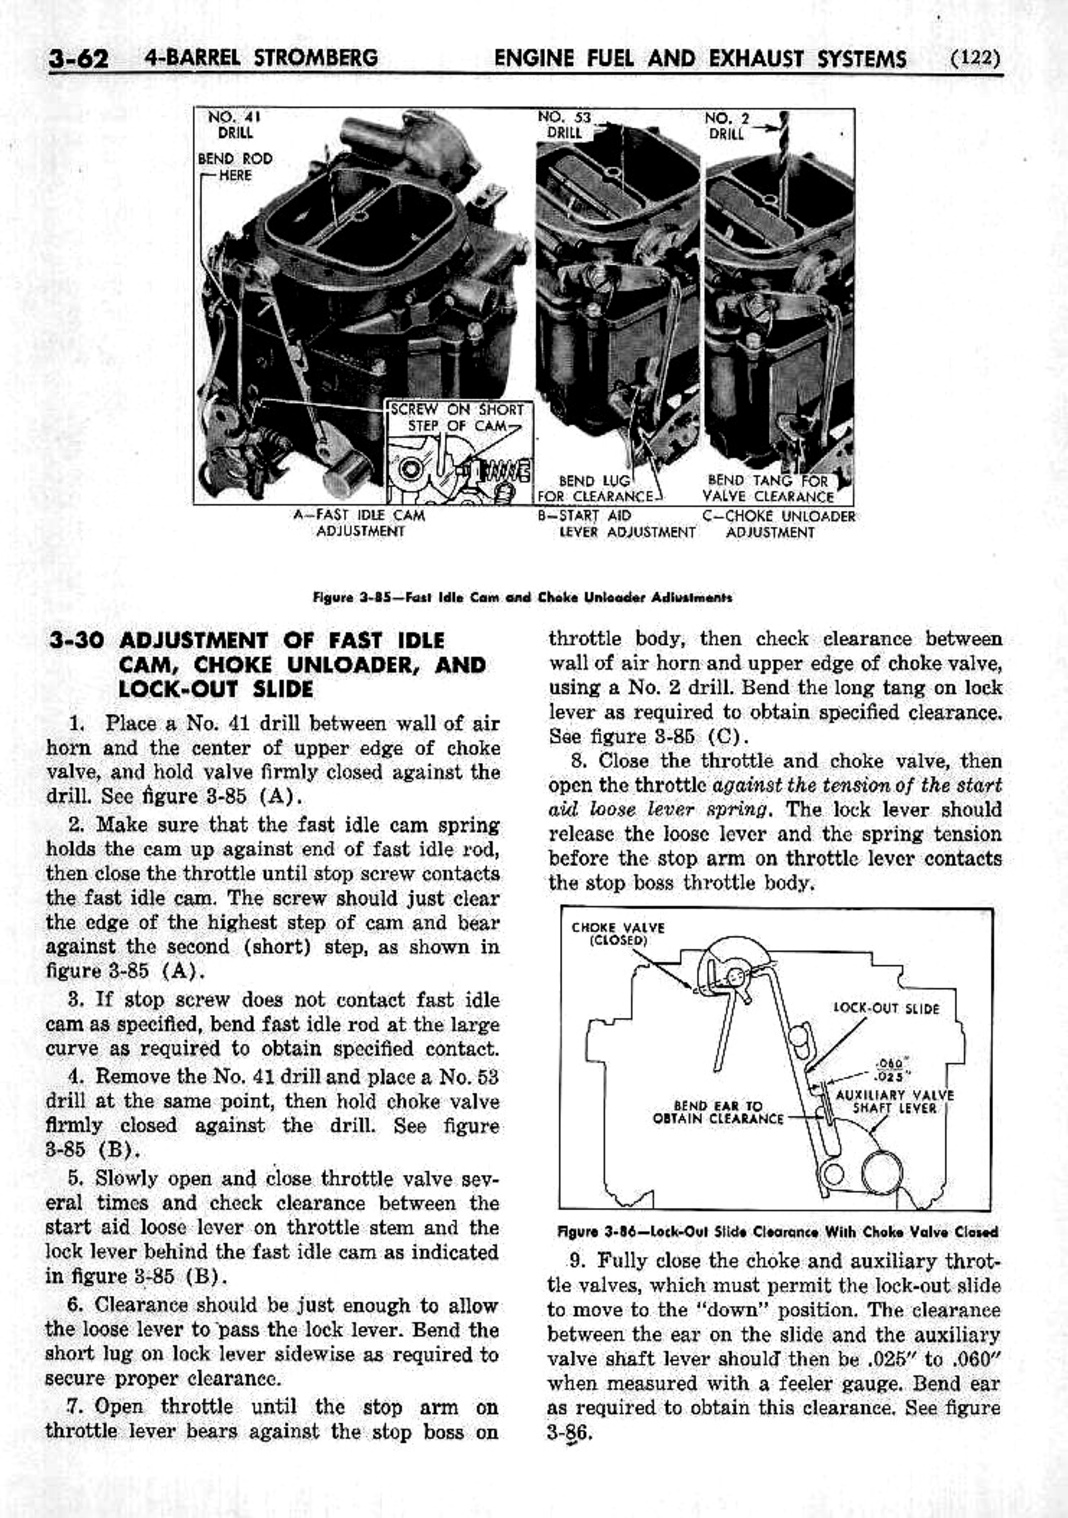 n_04 1953 Buick Shop Manual - Engine Fuel & Exhaust-062-062.jpg